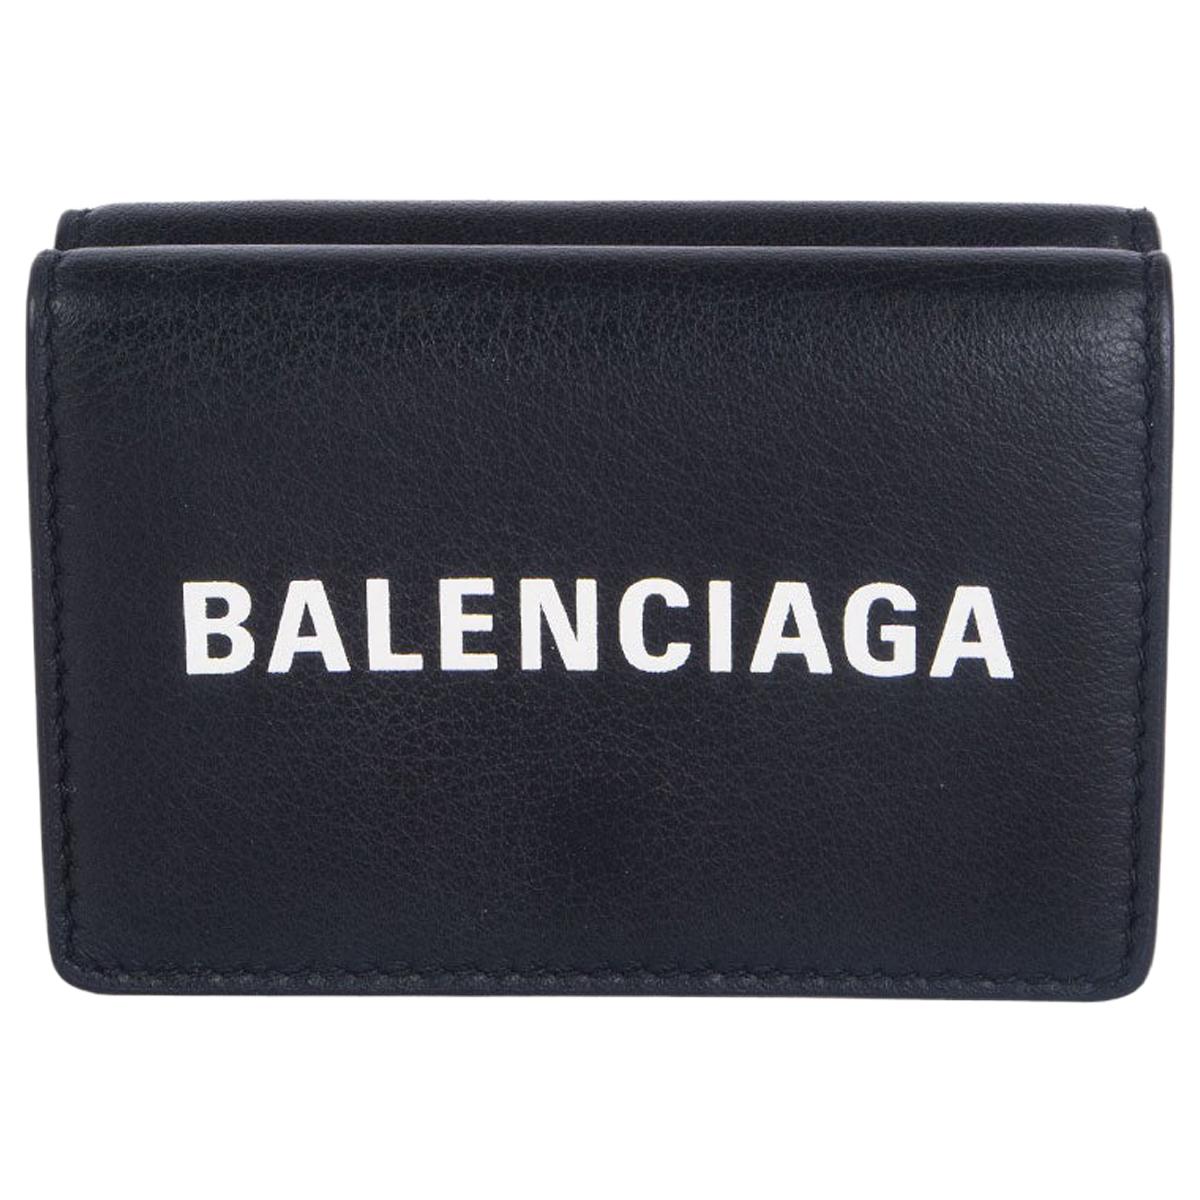 BALENCIAGA black leather CASH MINI Wallet